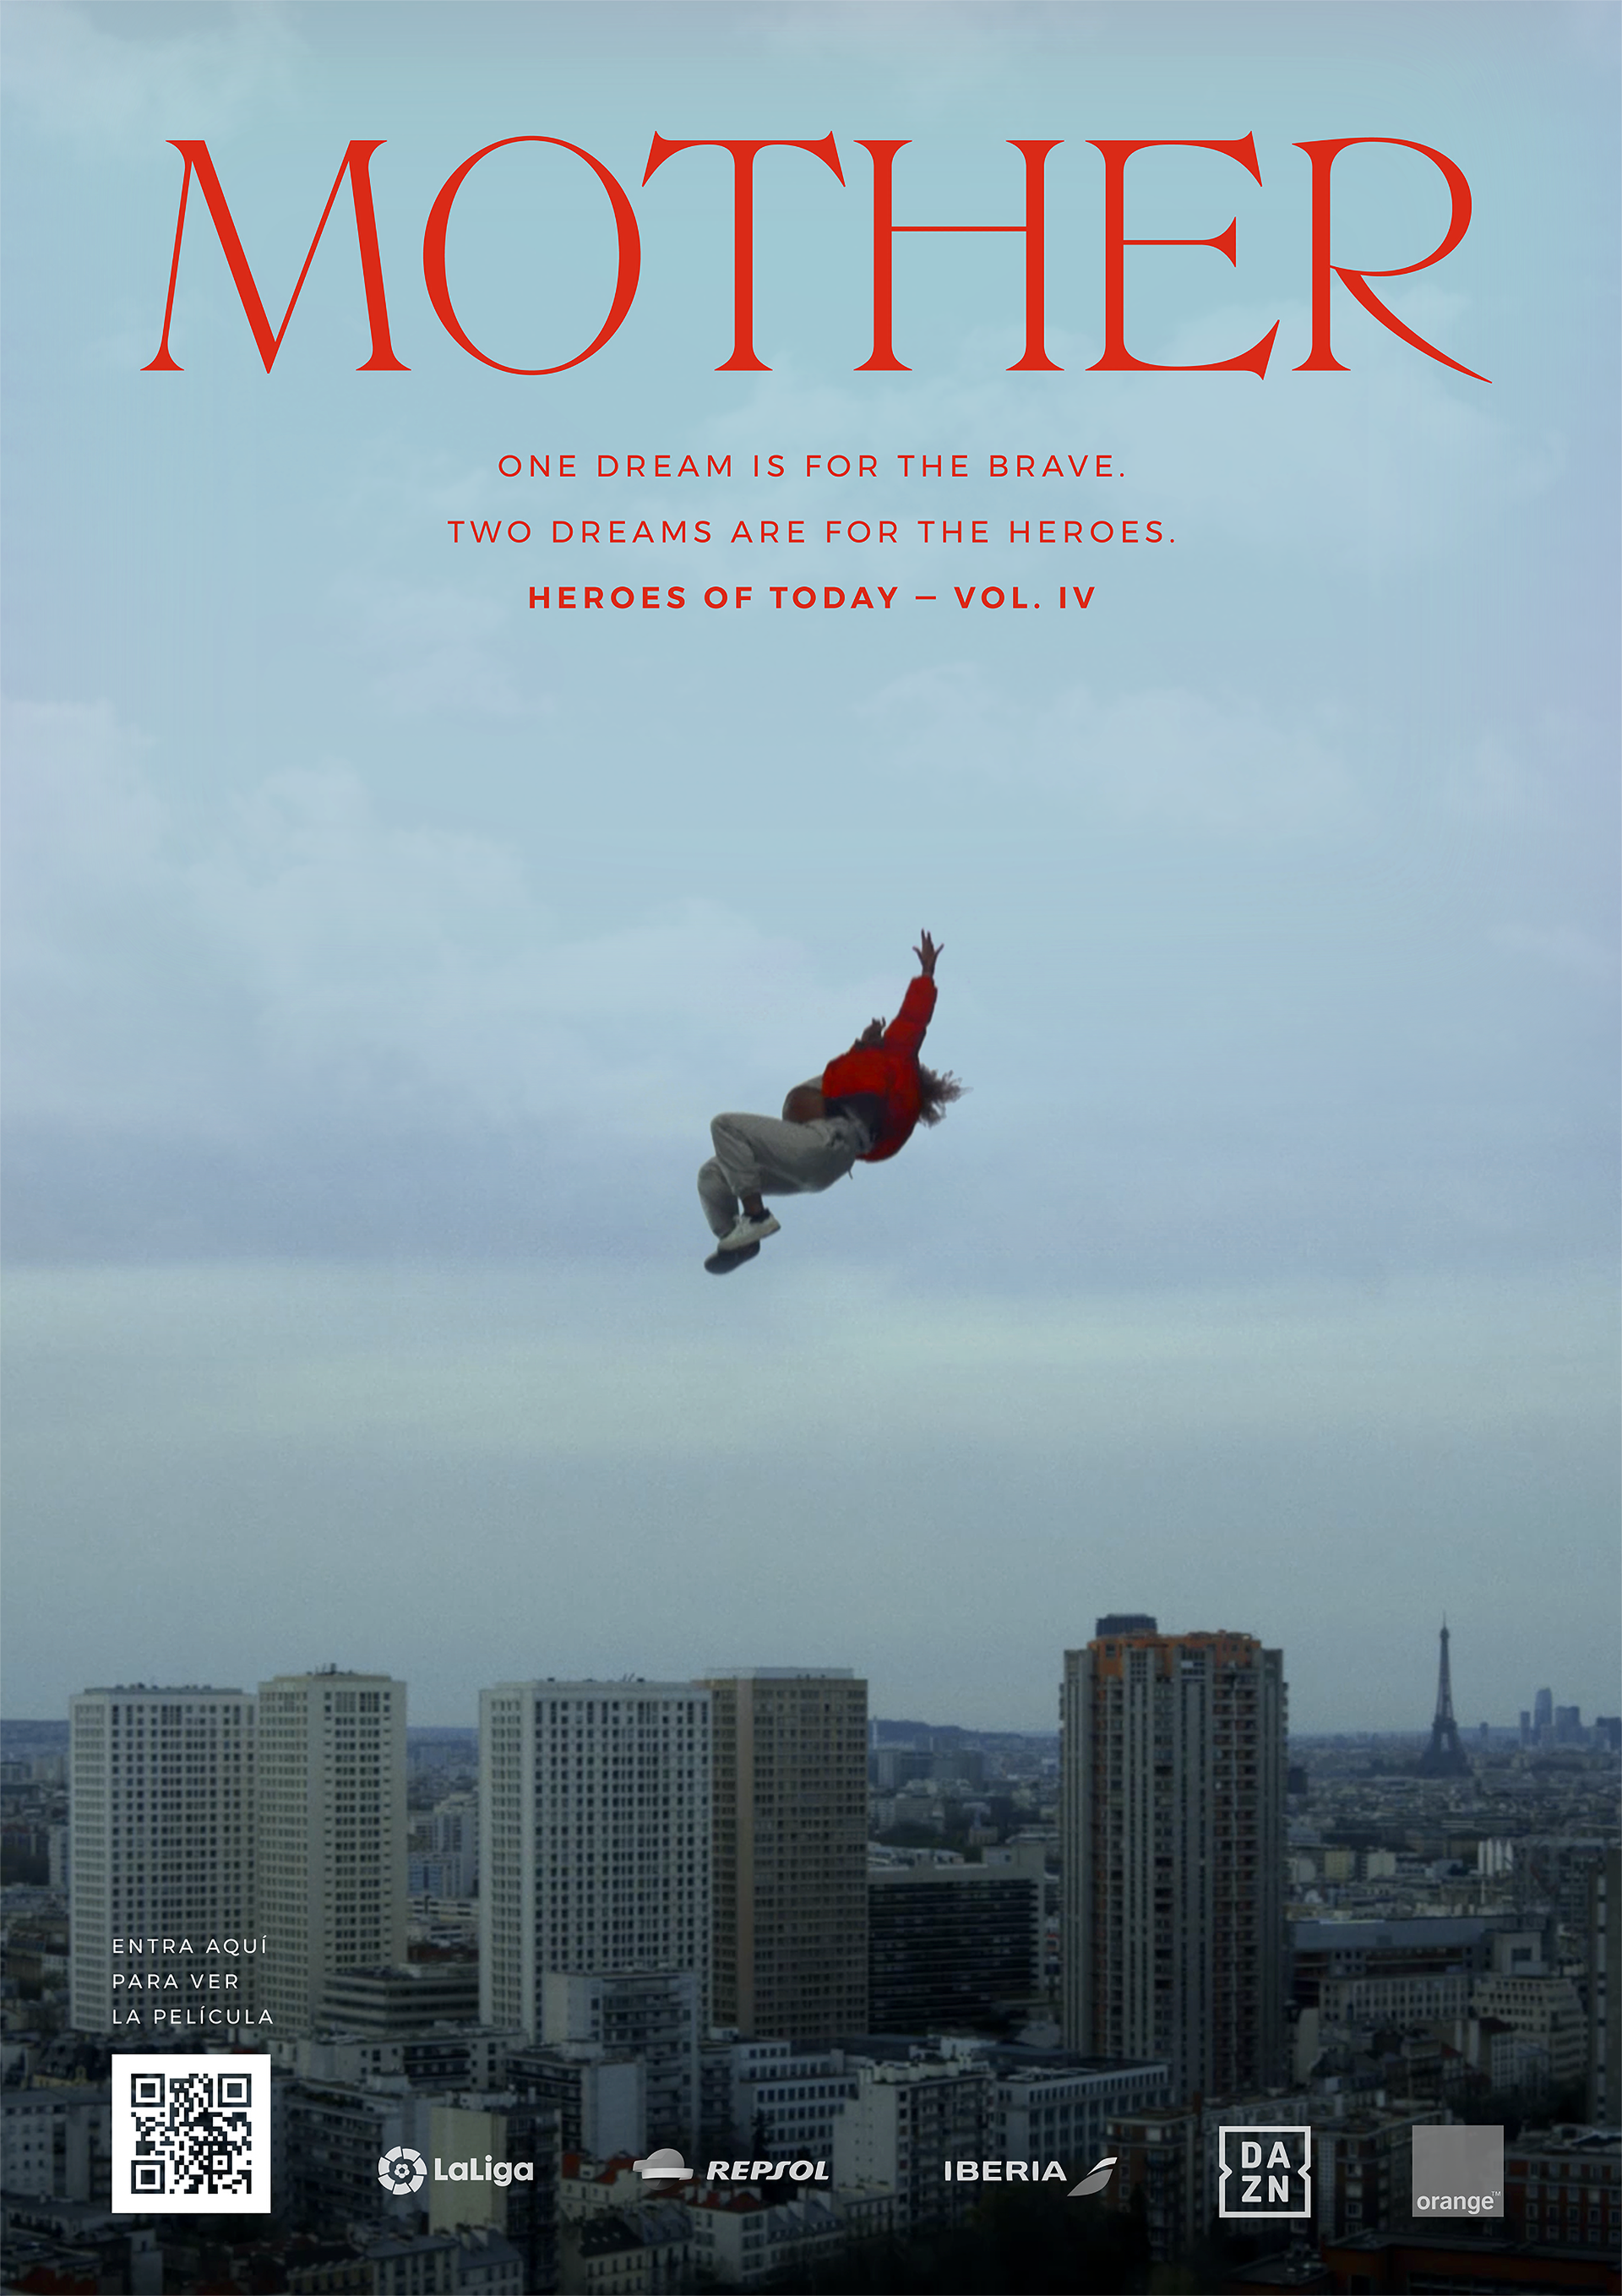 Poster image of female falling through the air in Paris